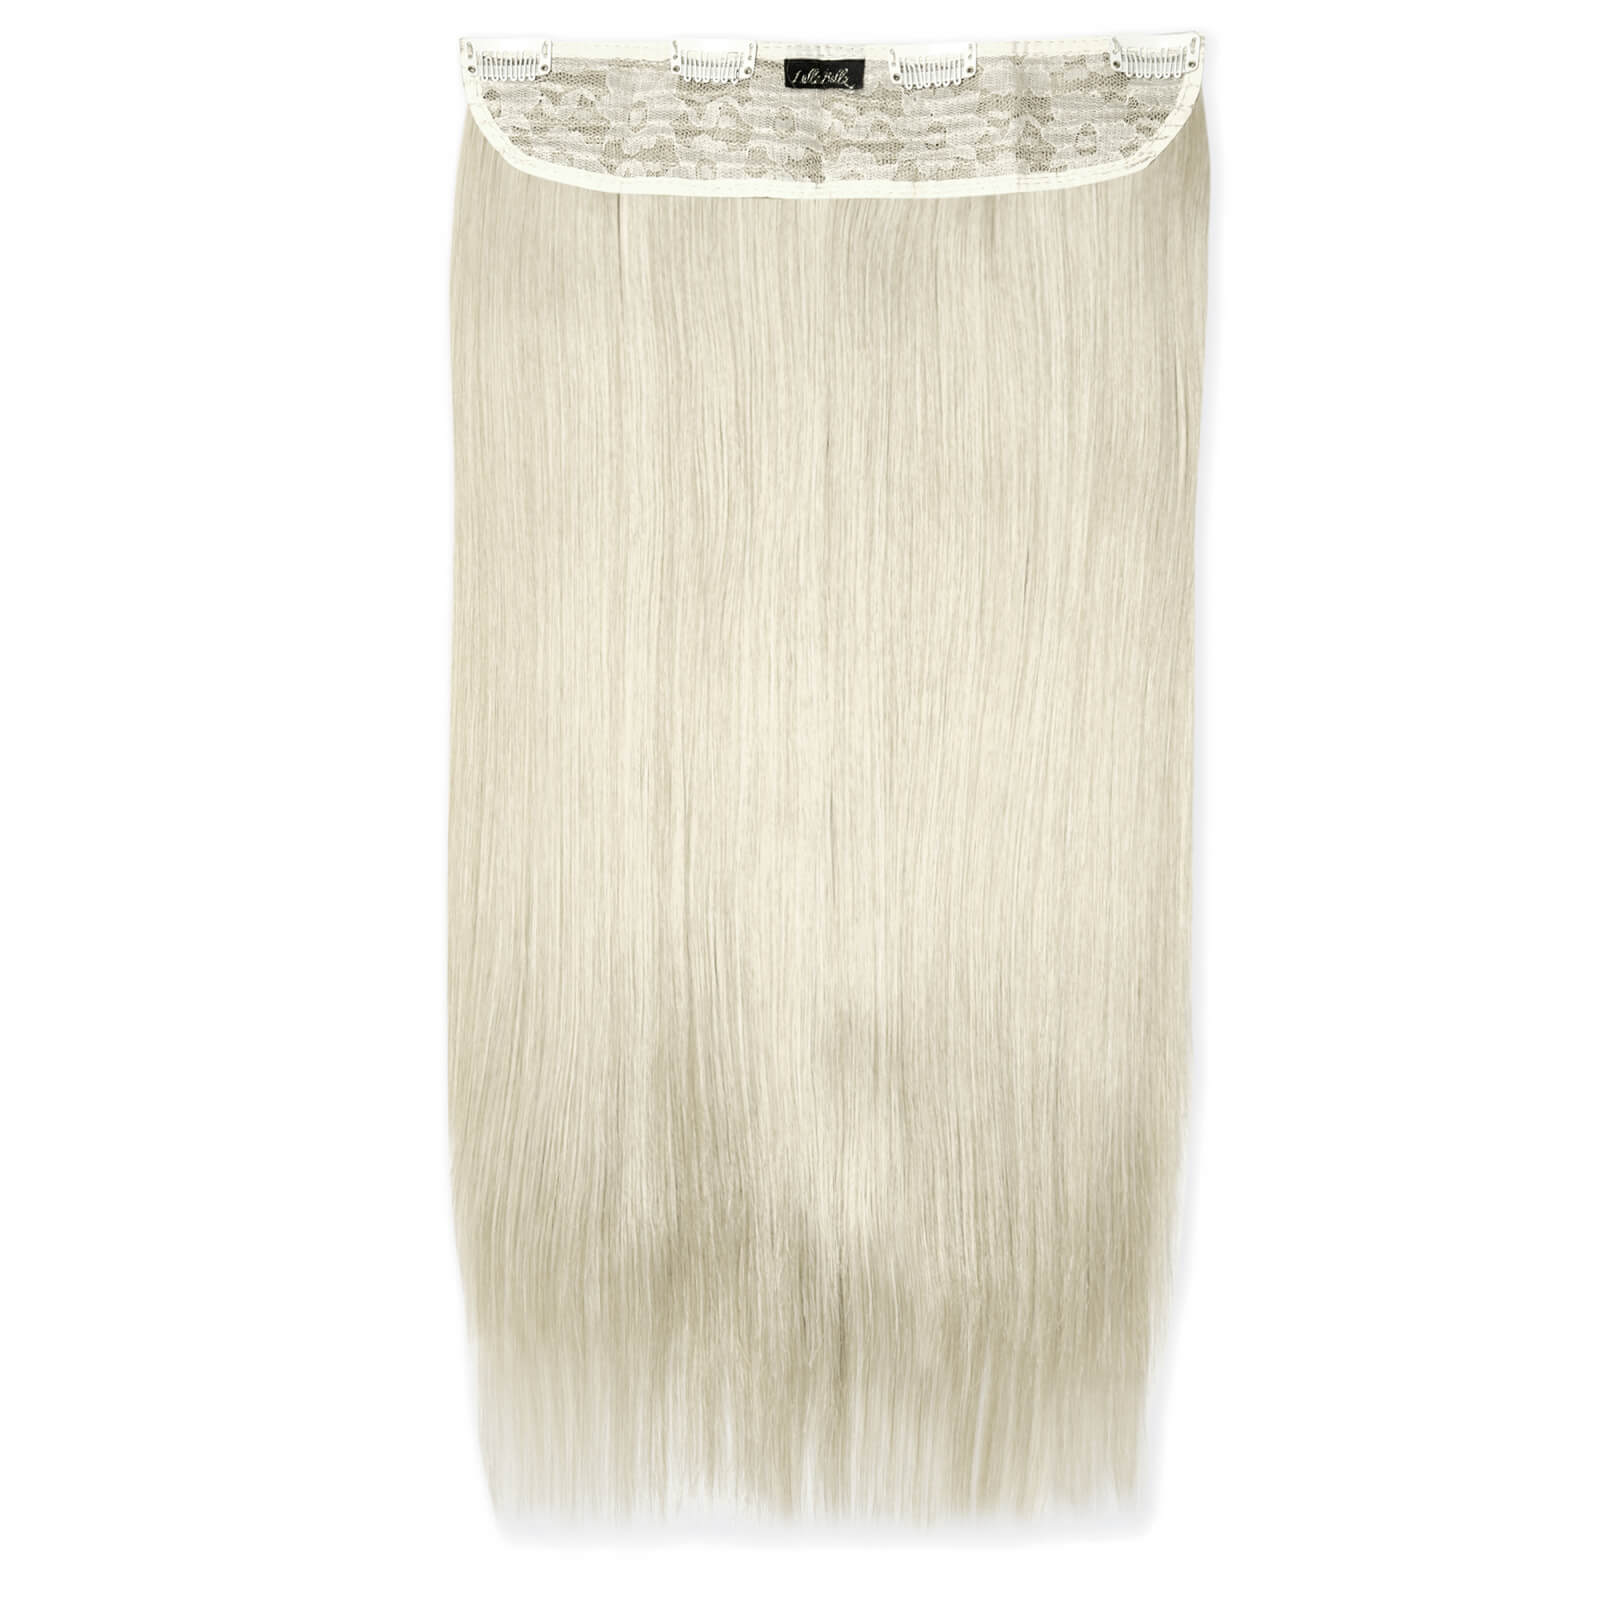 LullaBellz Thick 24 1-Piece Straight Clip in Hair Extensions (Various Colours) - Bleach Blonde von Lullabellz